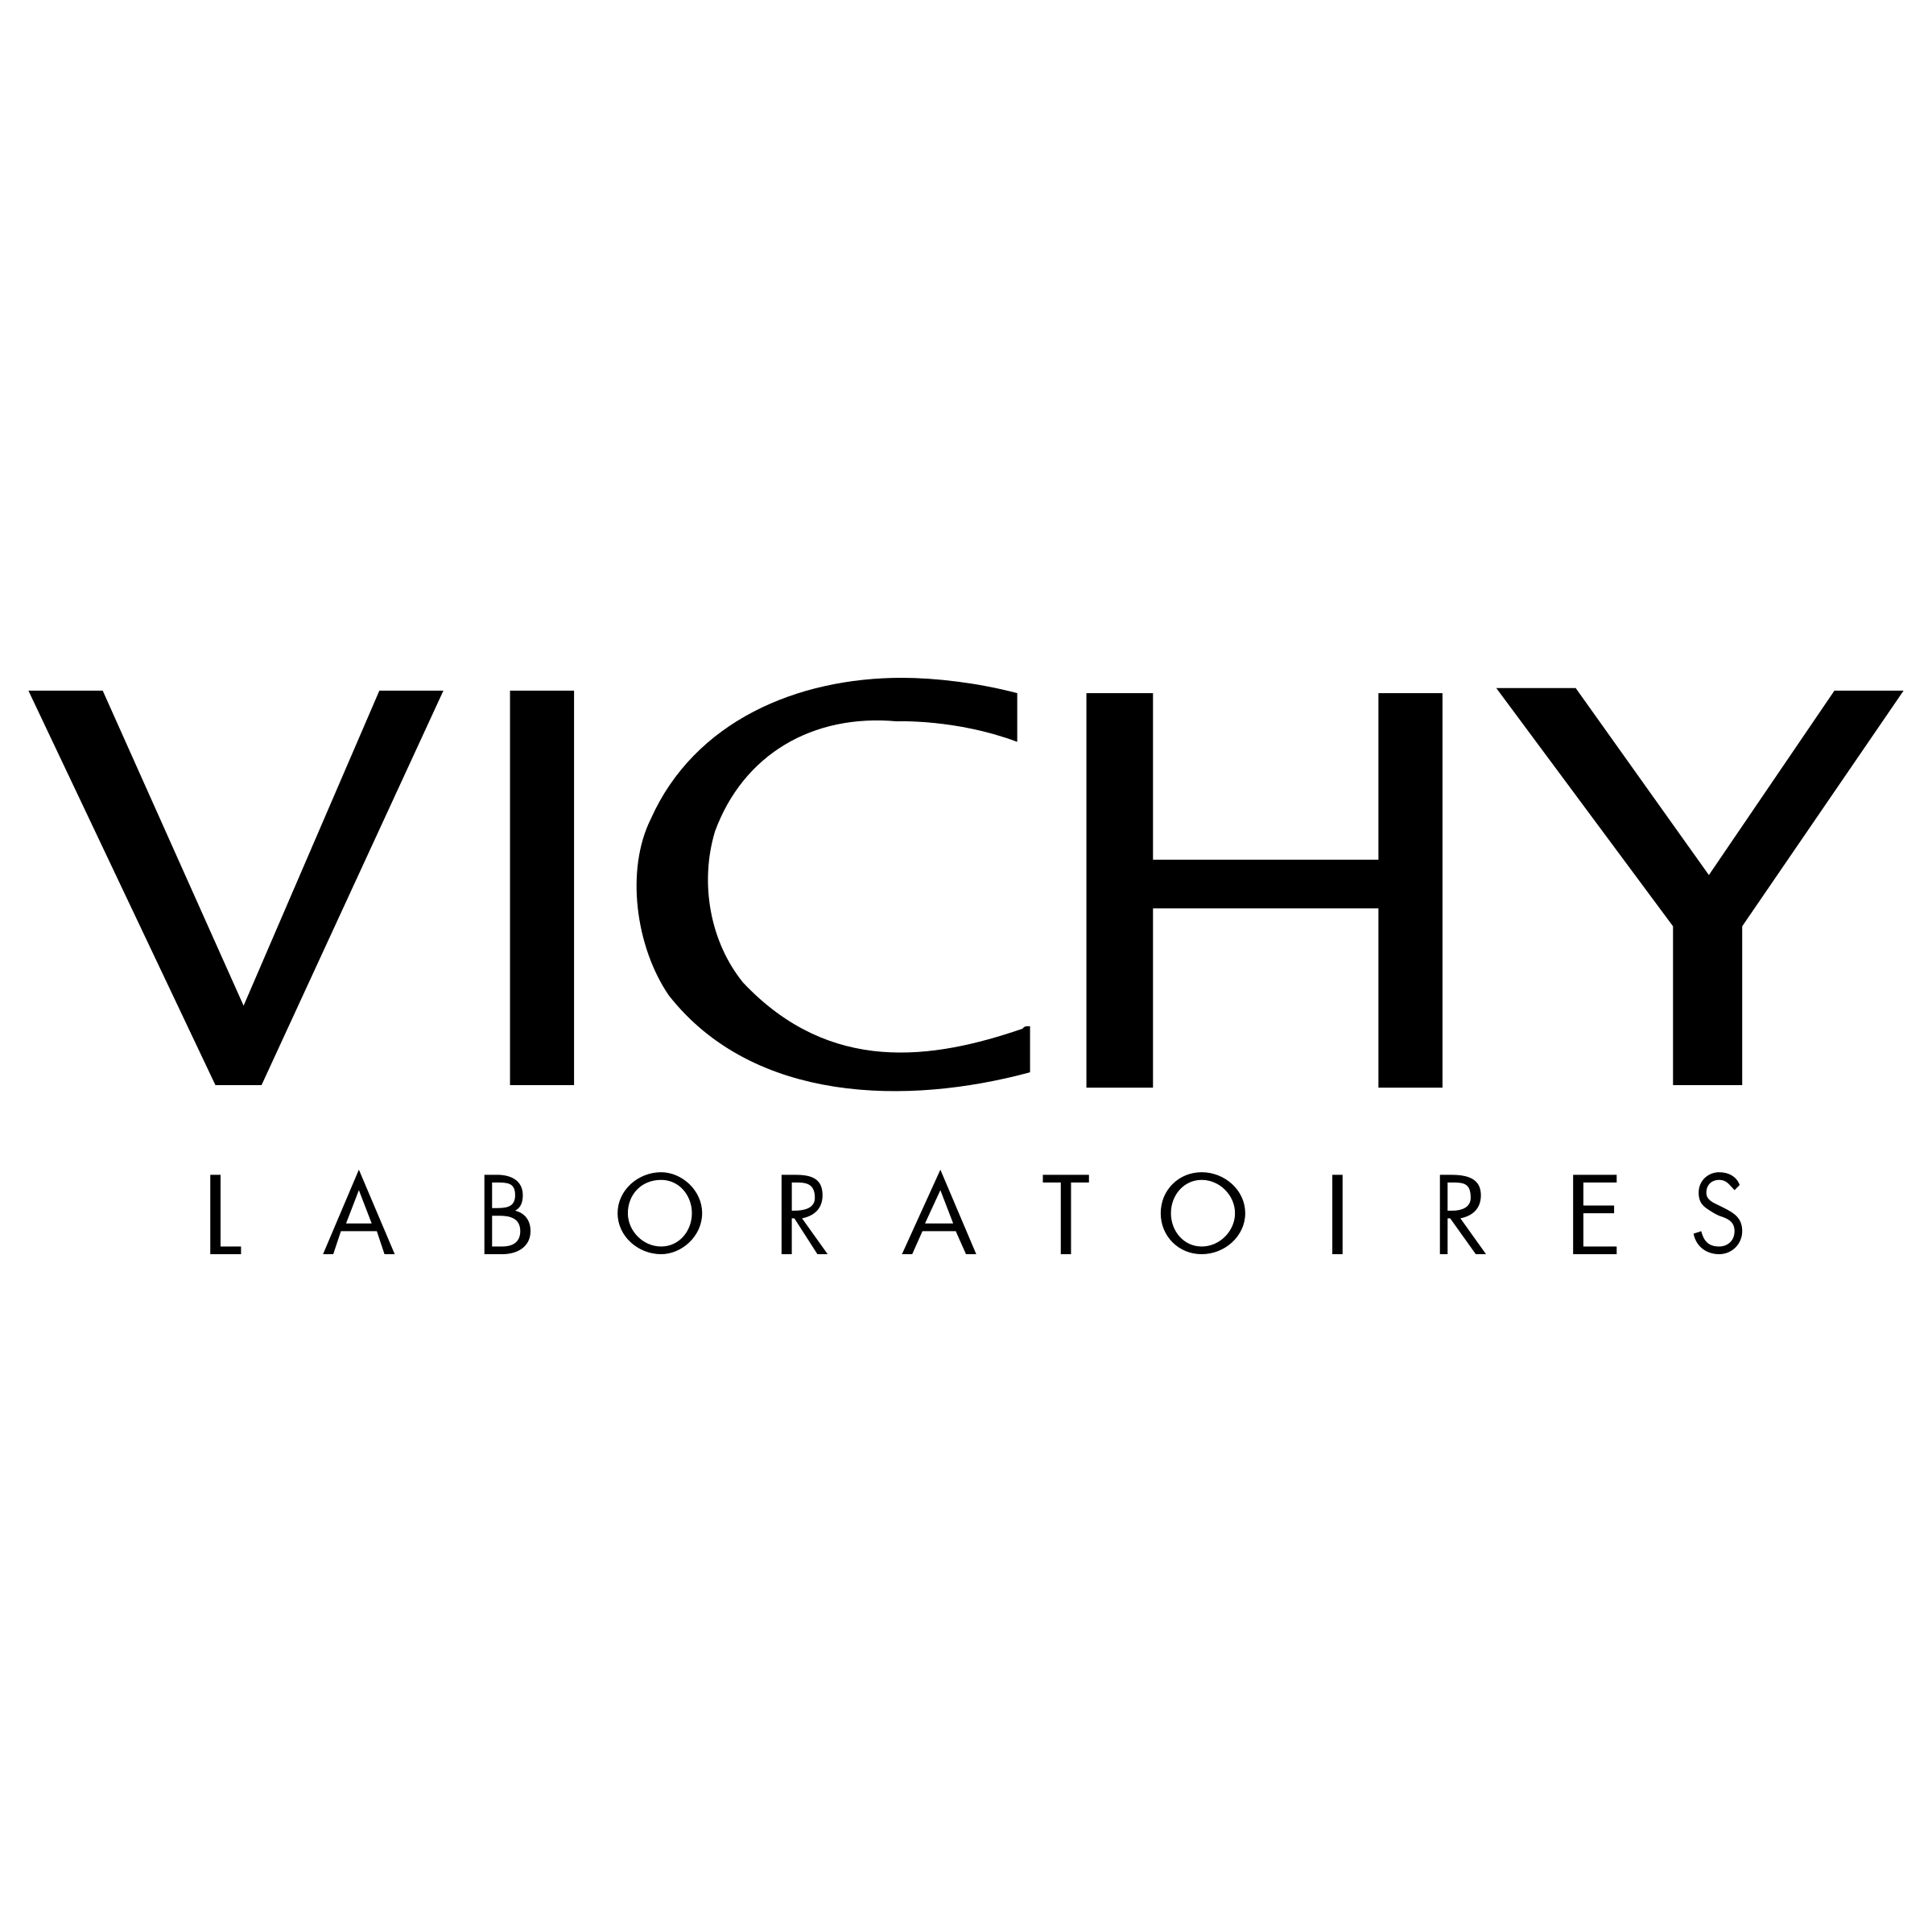 Vichy 1 Logo Png Transparent